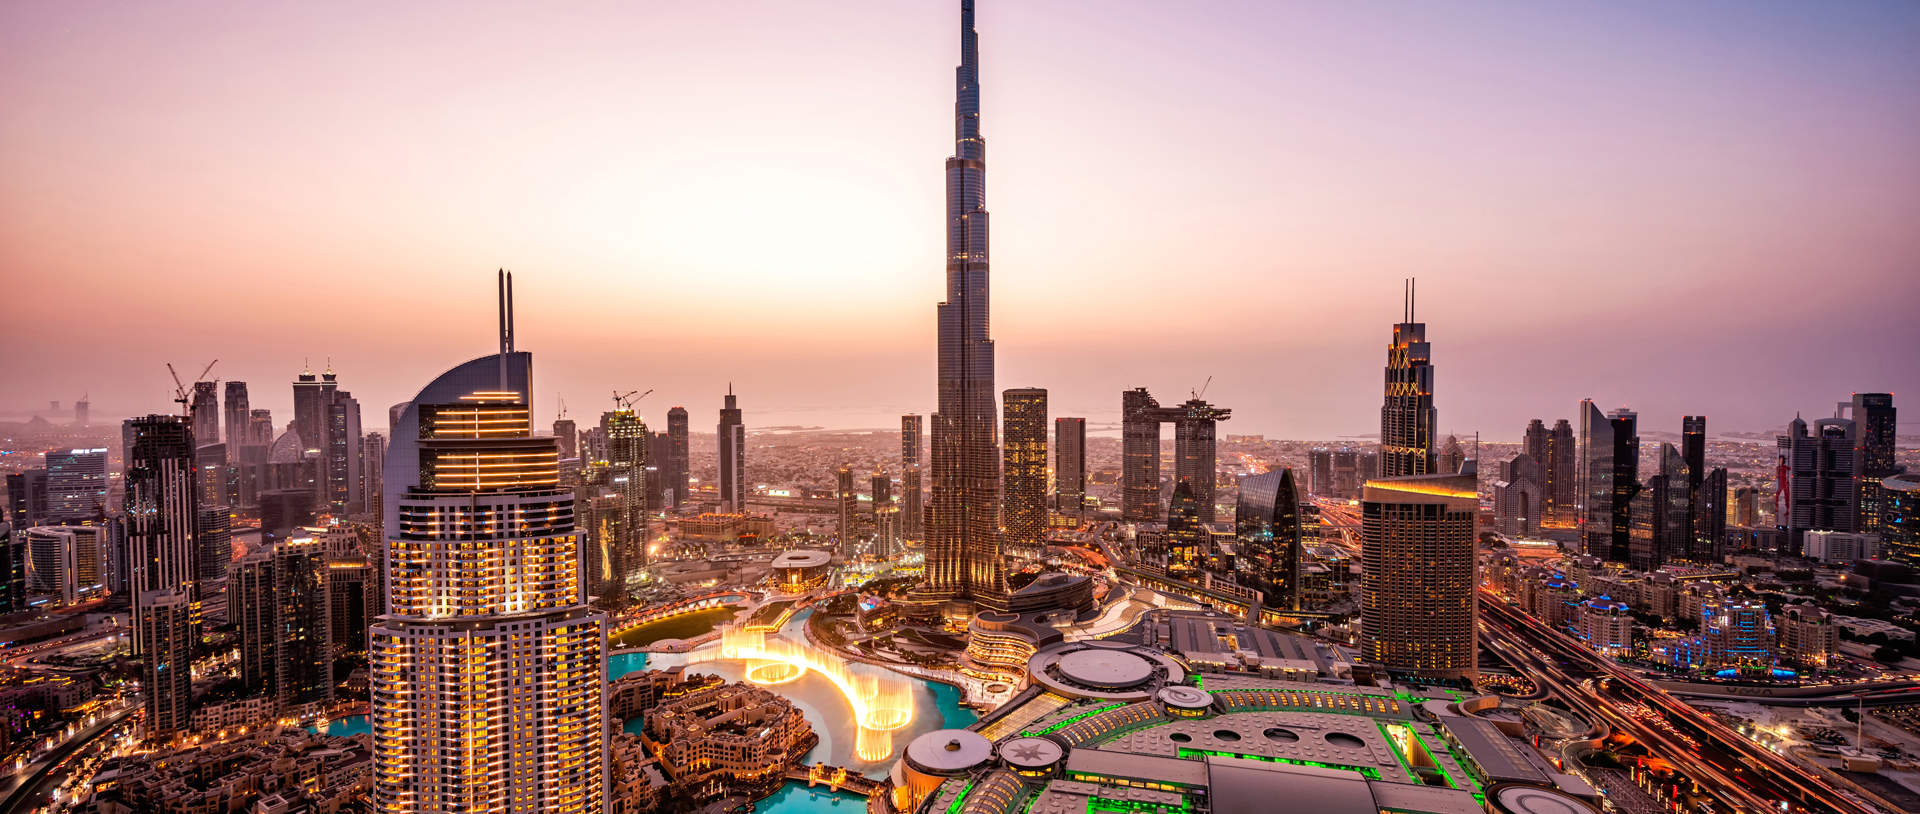 Cityscape Of Downtown Dubai With Burj Khalifa